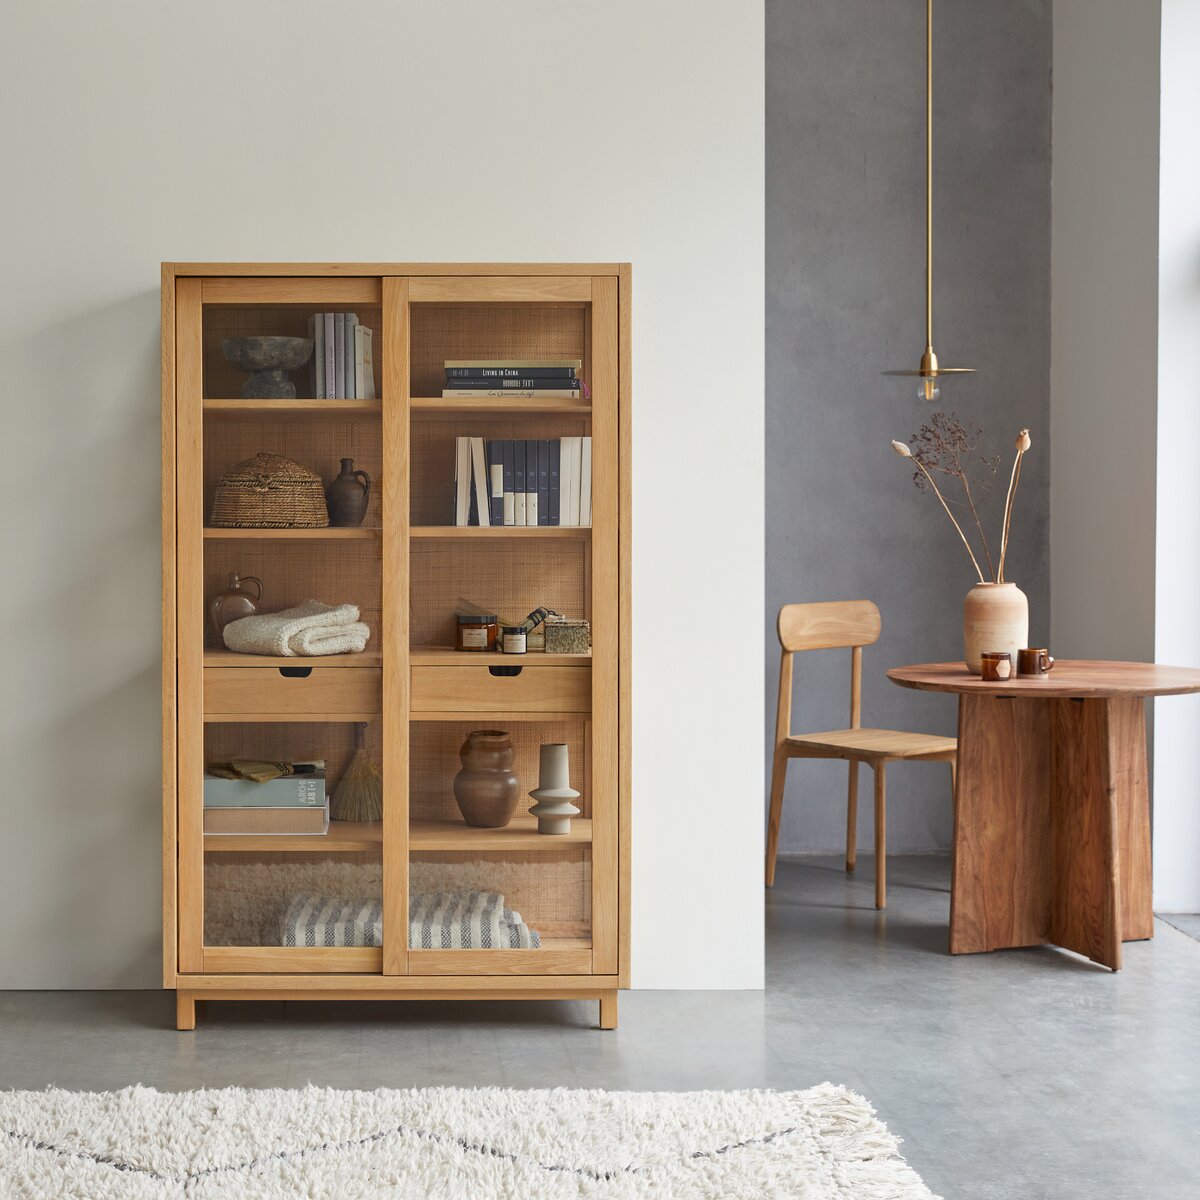 Adel - Solid oak bookcase